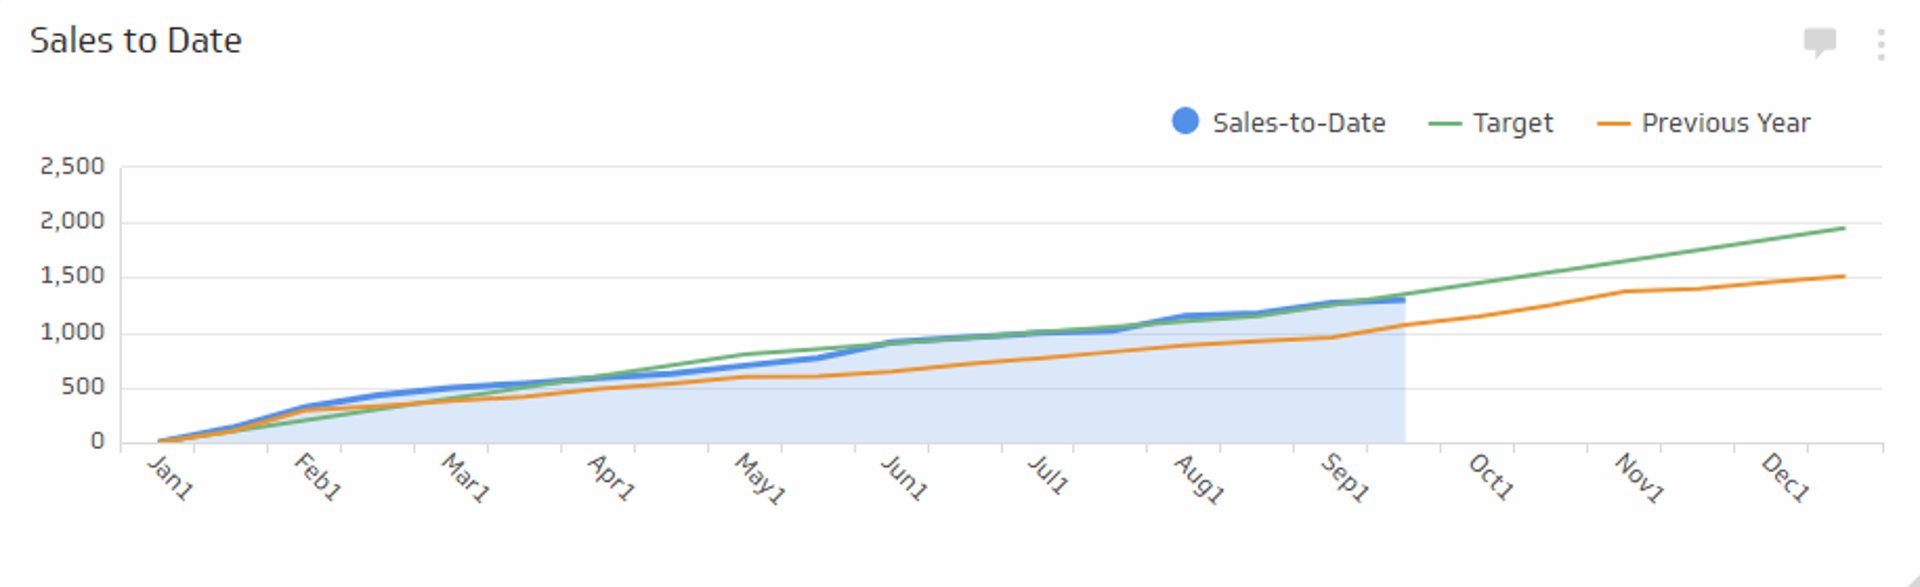 Sales KPI Example - Sales-to-Date Metric